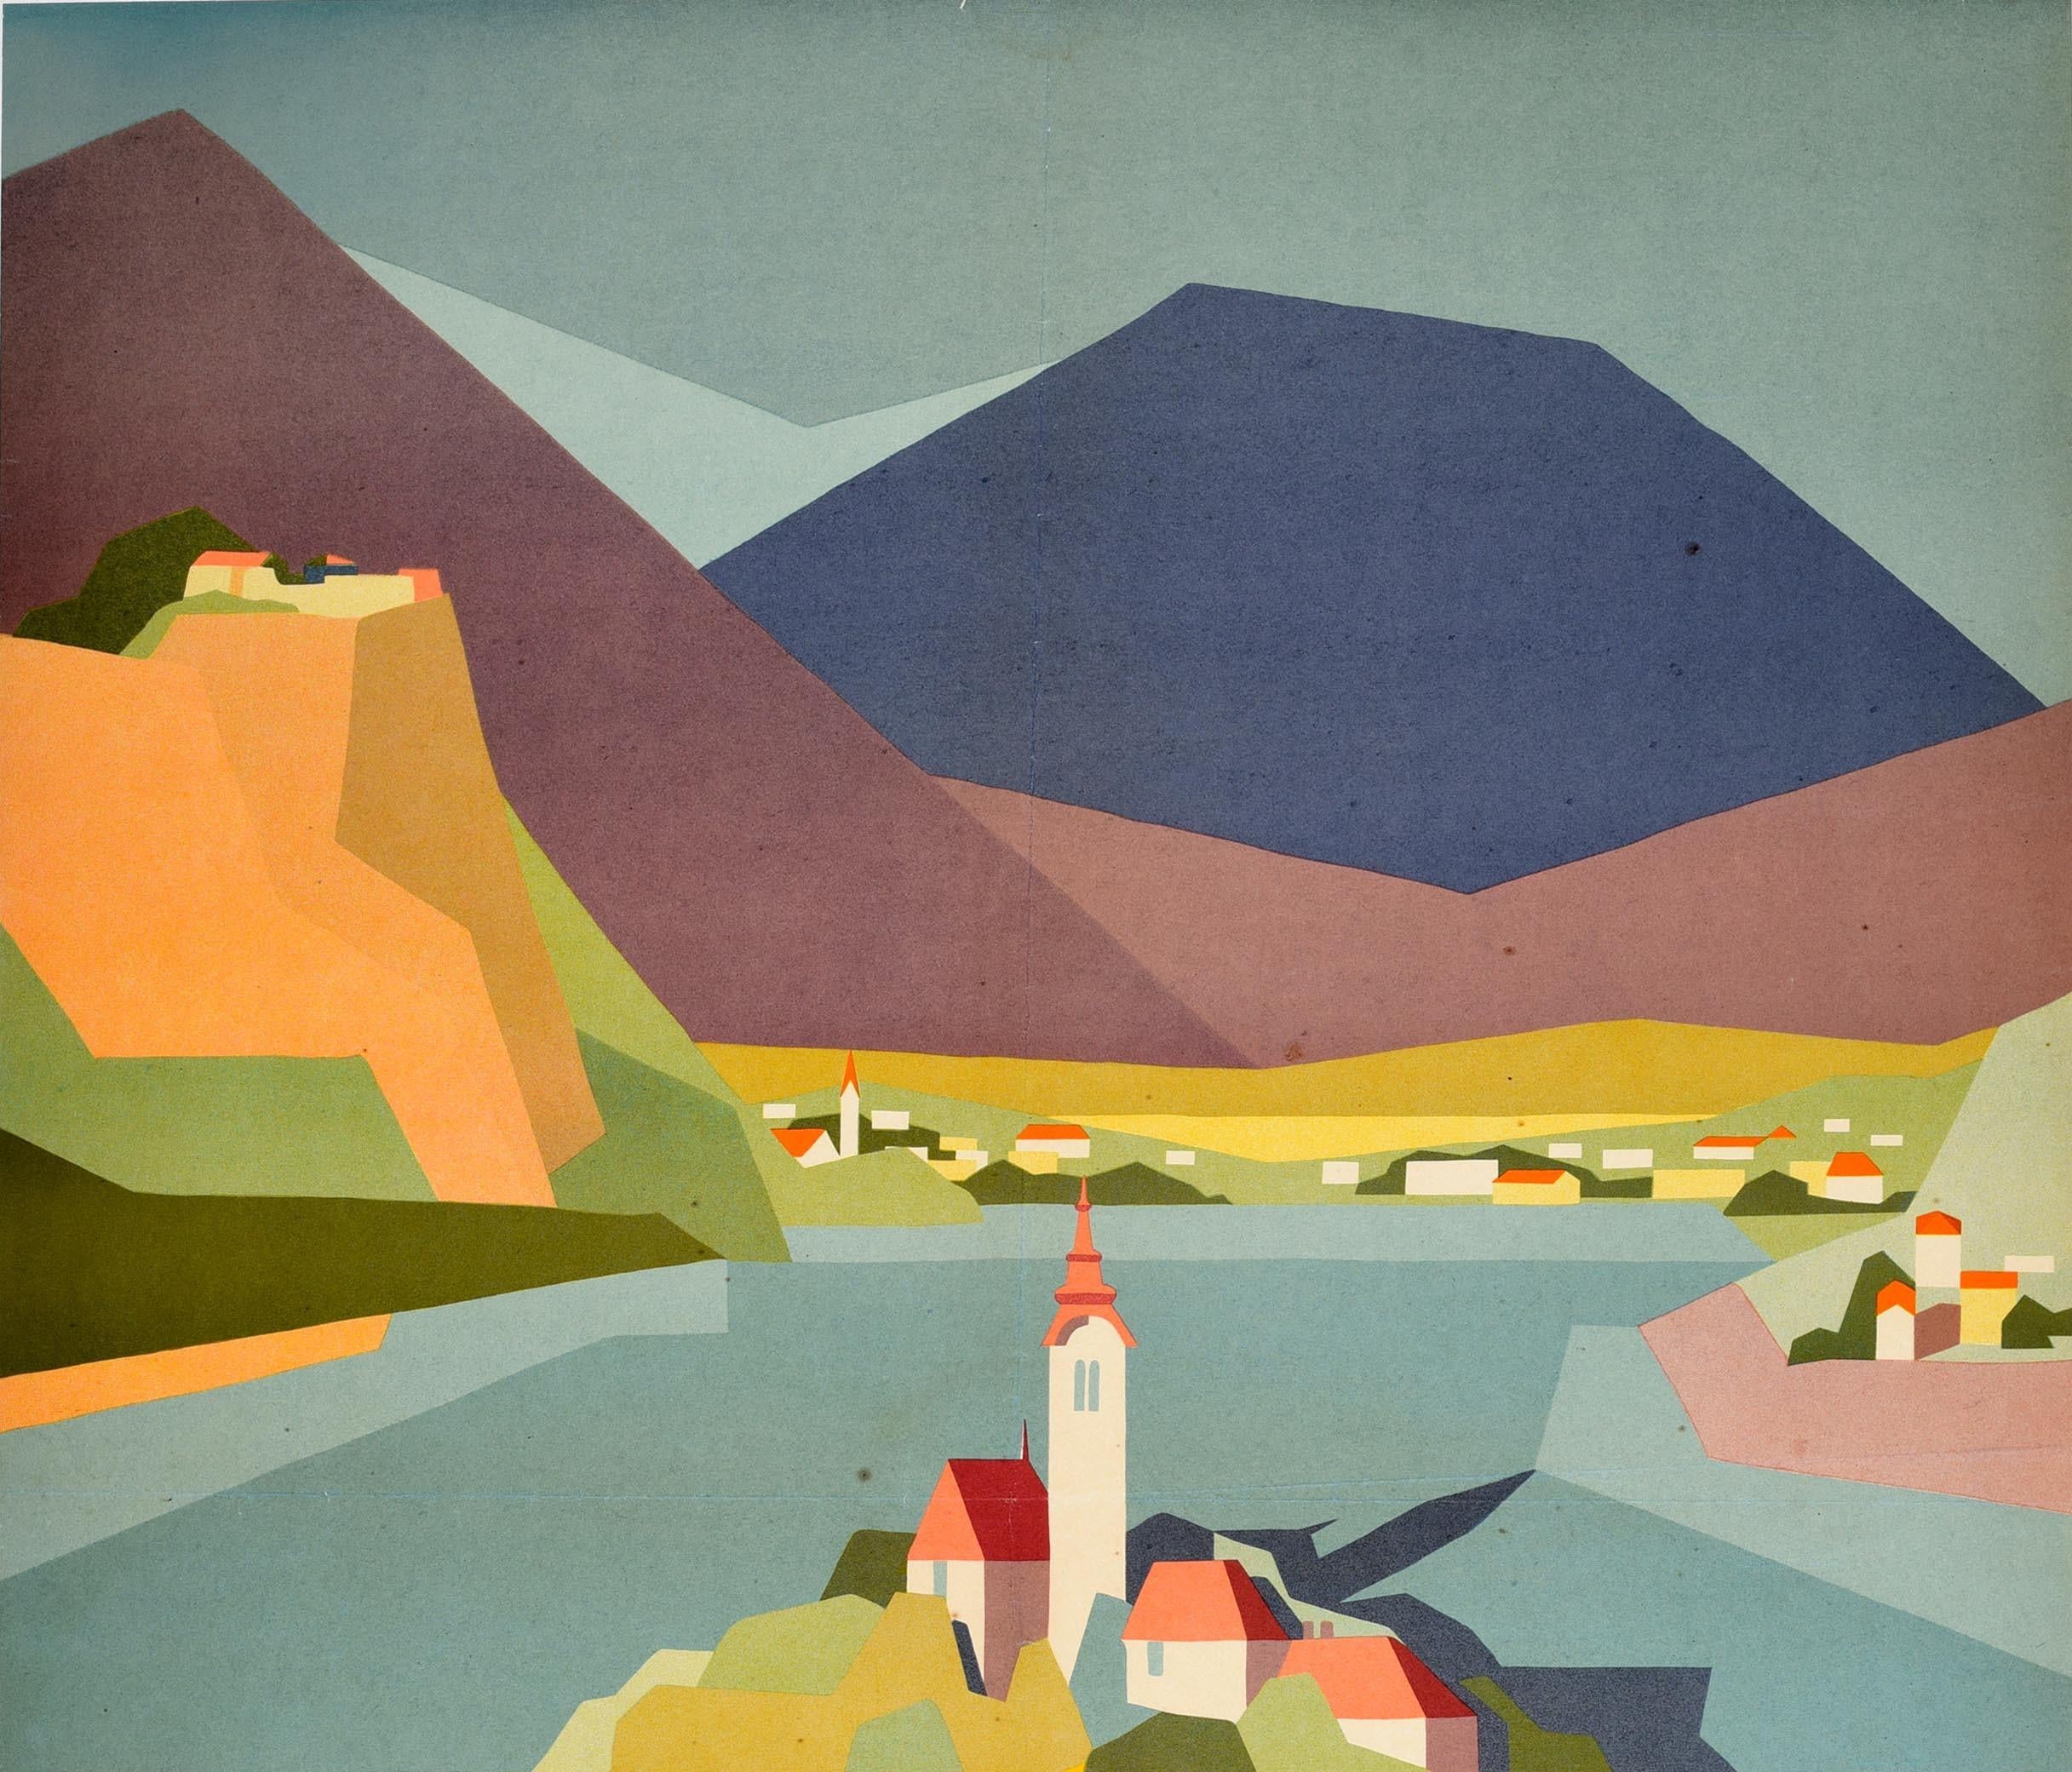 Original Vintage Travel Poster Lake Bled Island Yugoslavia Mountains Midcentury - Print by Nesic